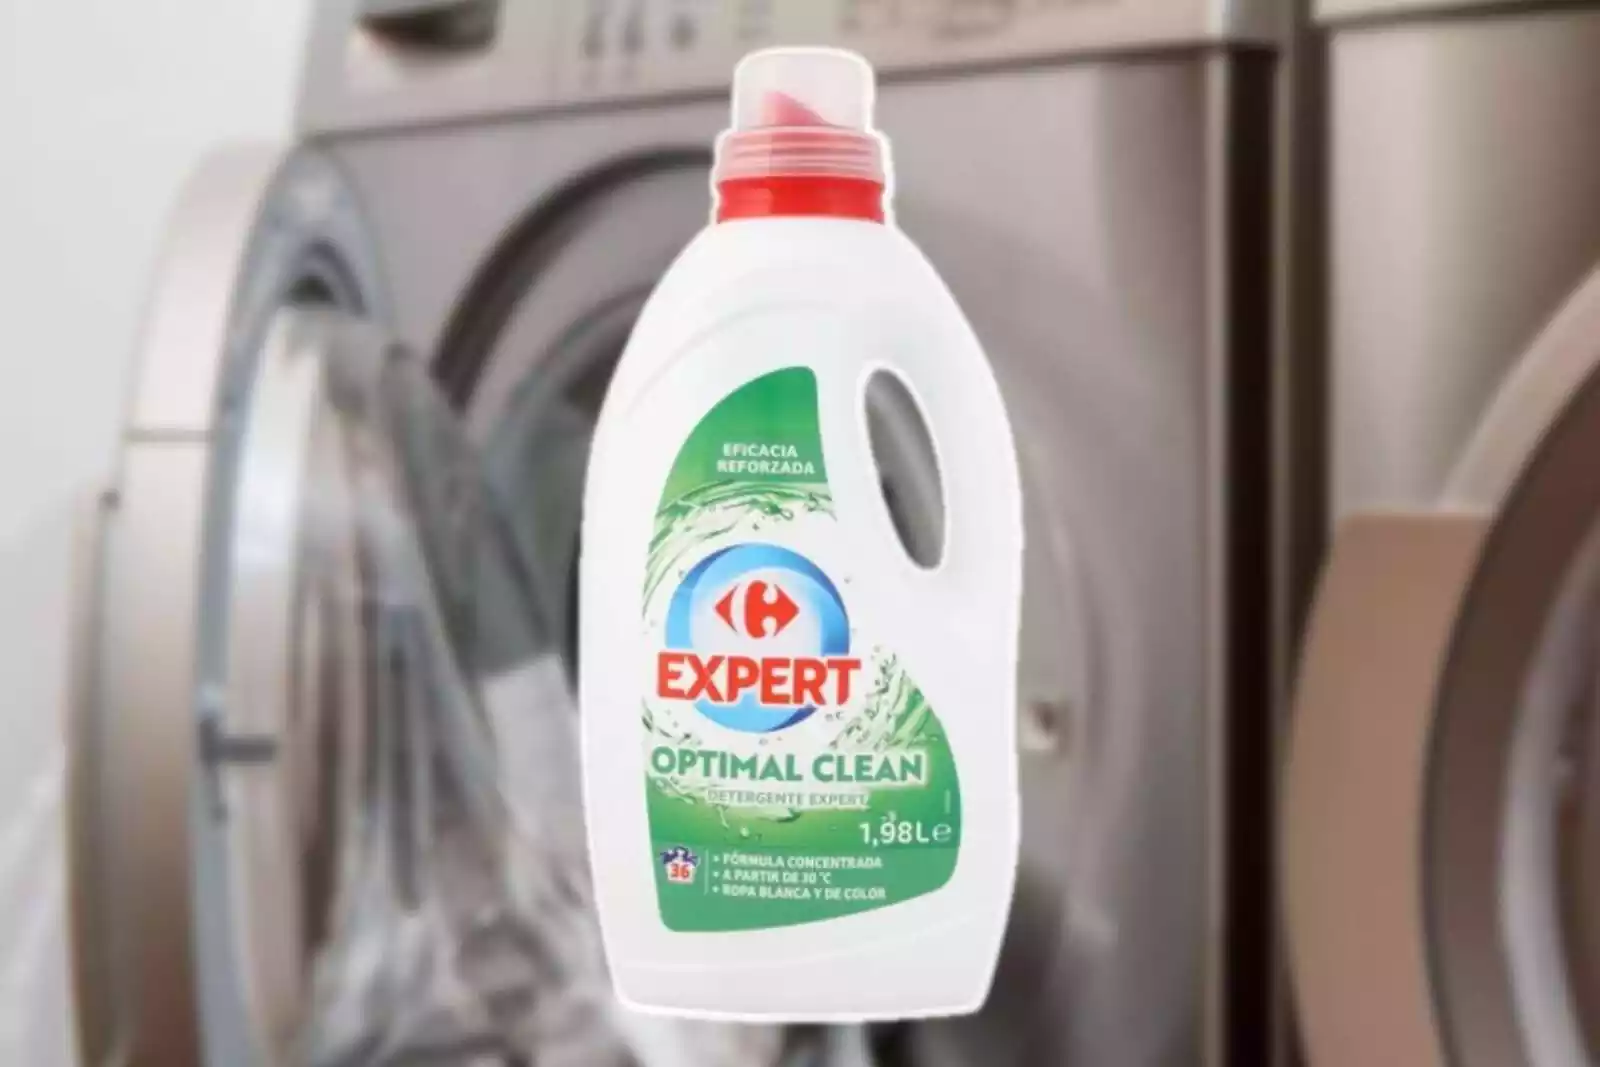 Mejores detergentes: Estos son los mejores detergentes para quitar